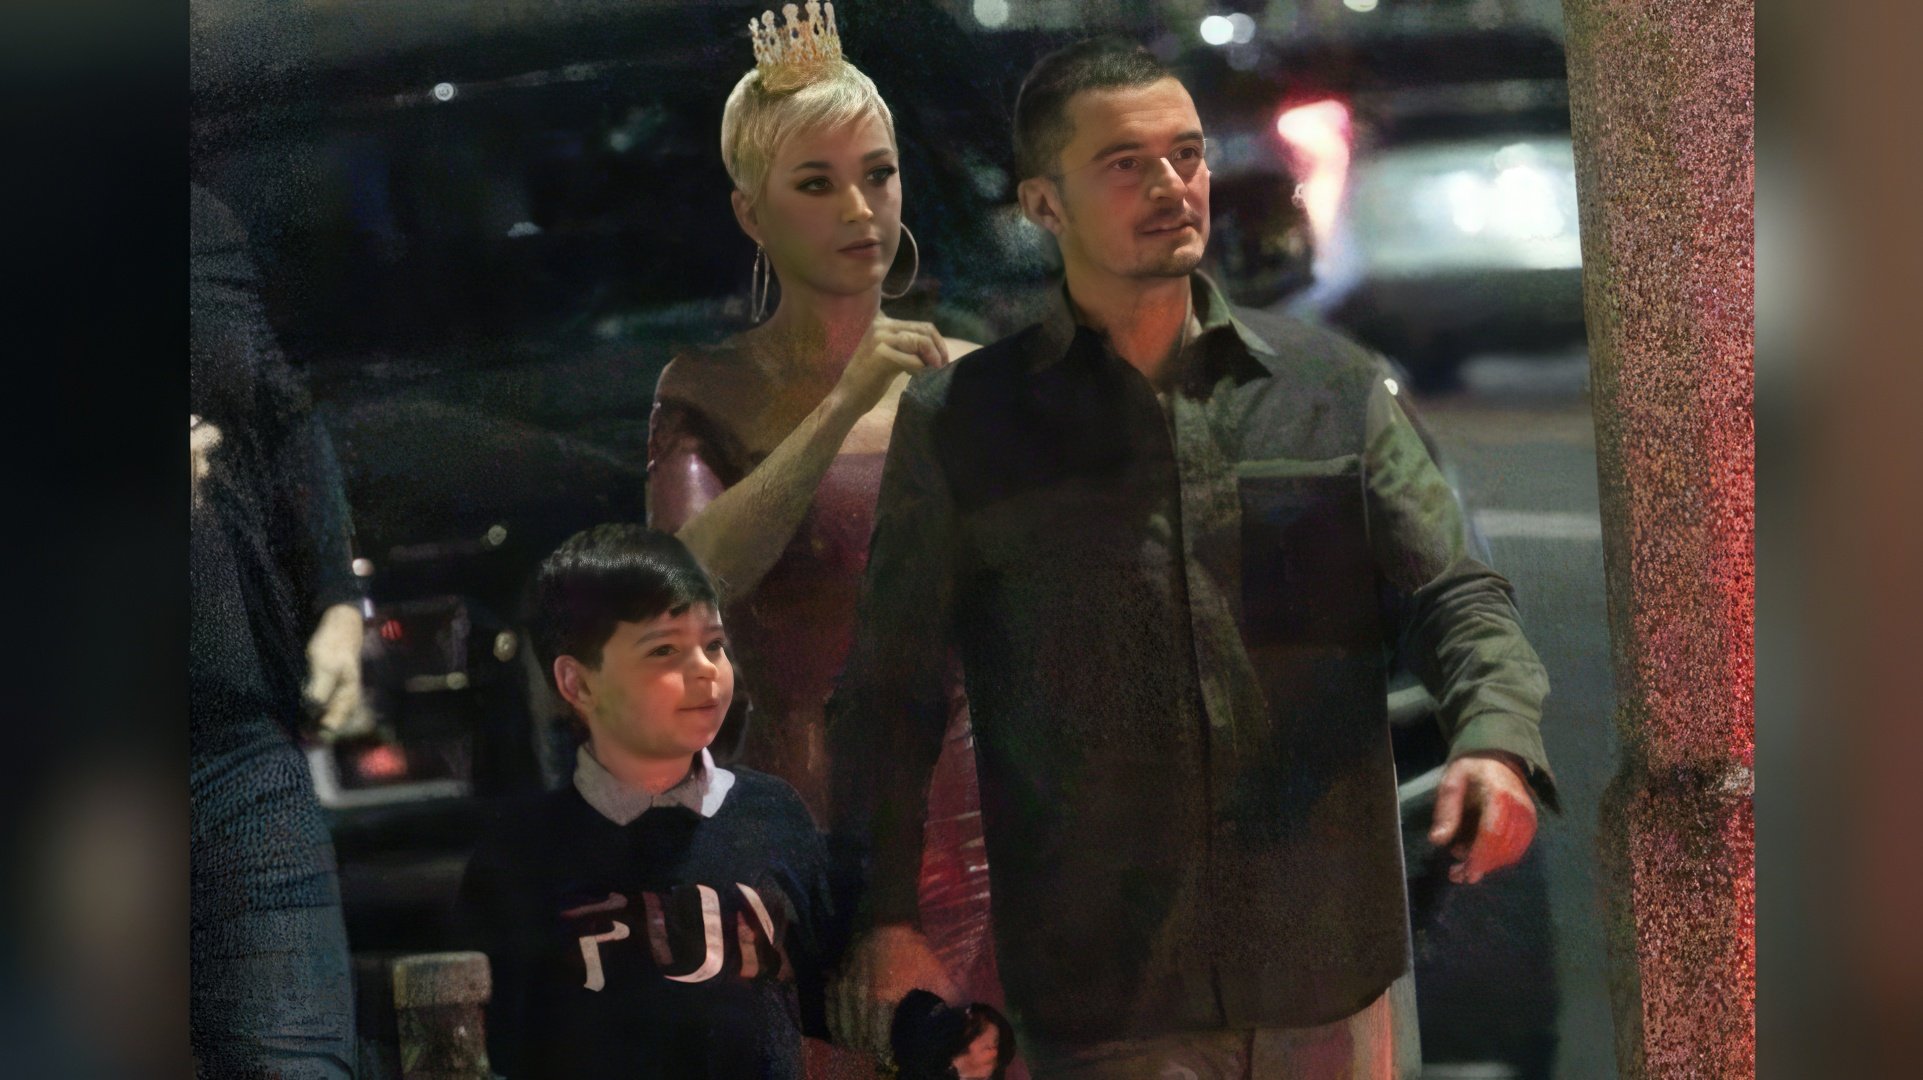 Orlando introduced Katy to his son Flynn